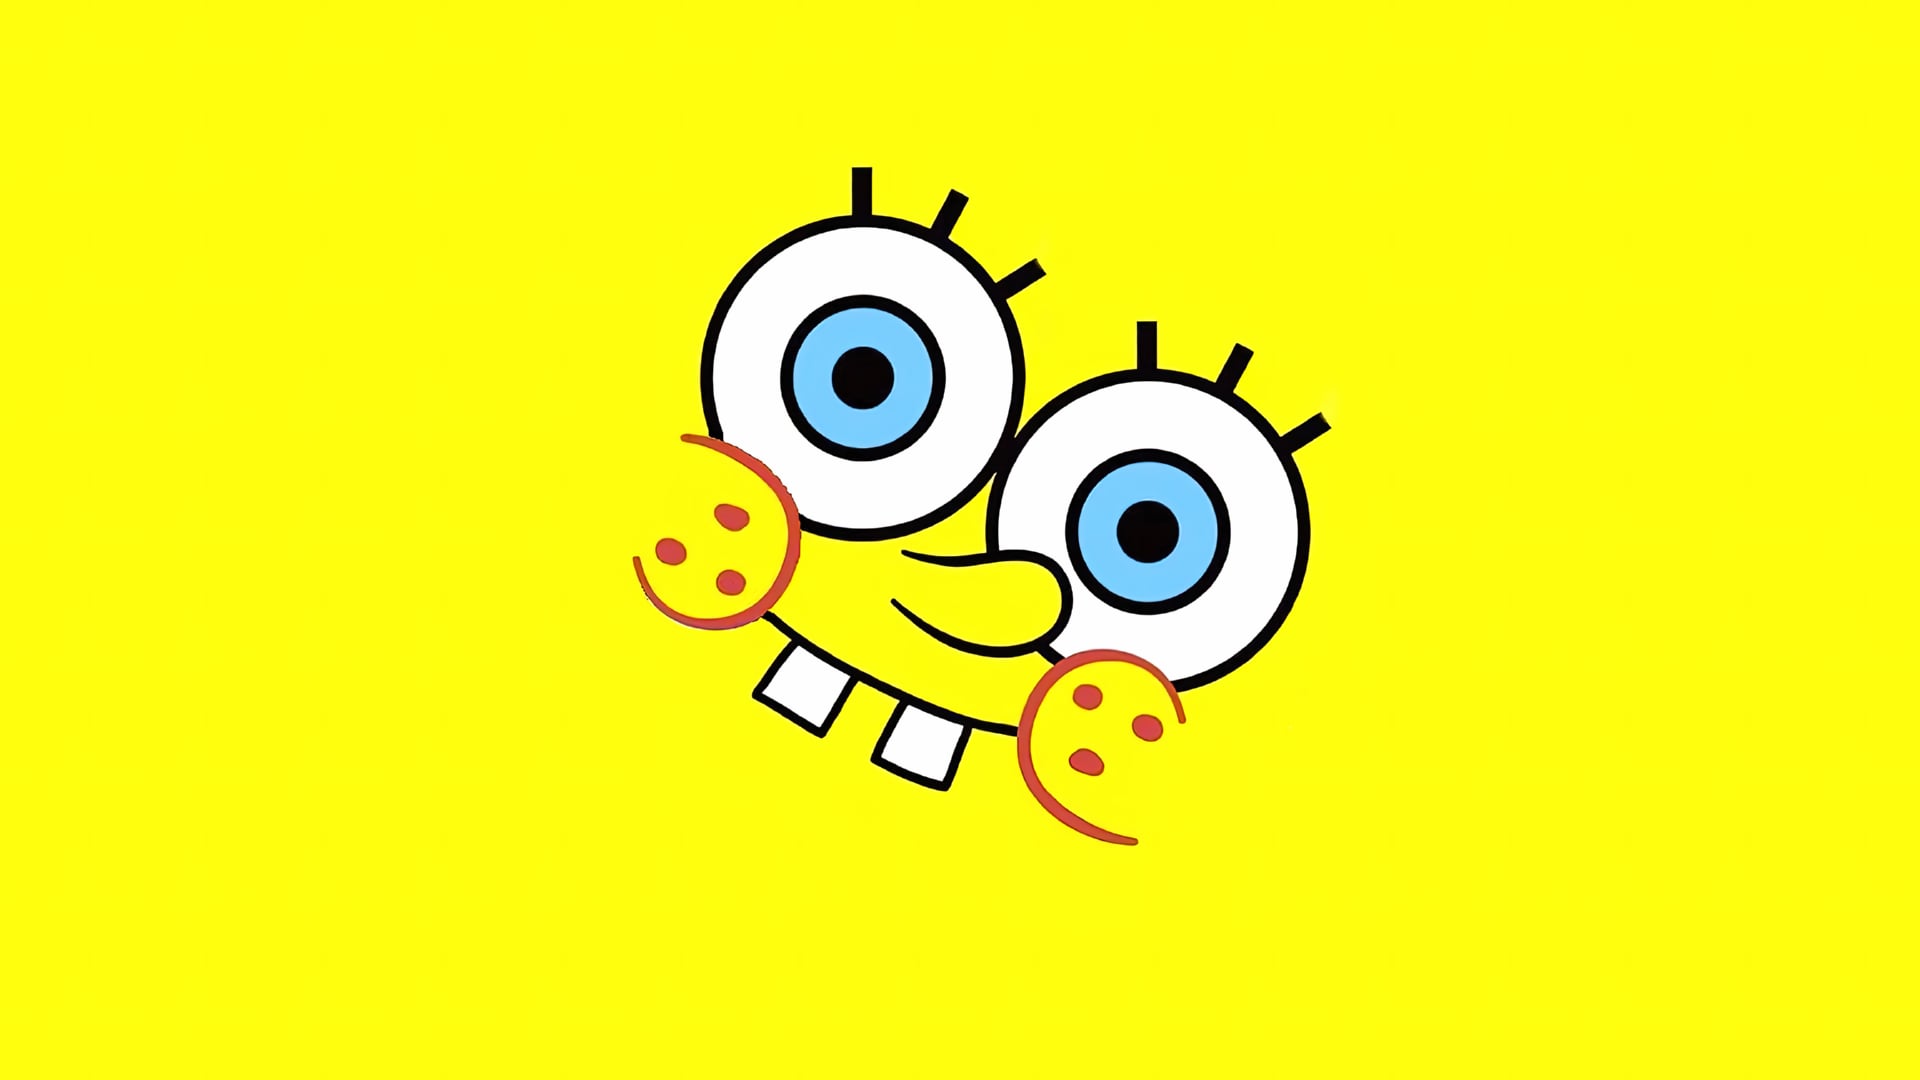 Digital Art SpongeBob SquarePants at 640 x 1136 iPhone 5 size wallpapers HD quality